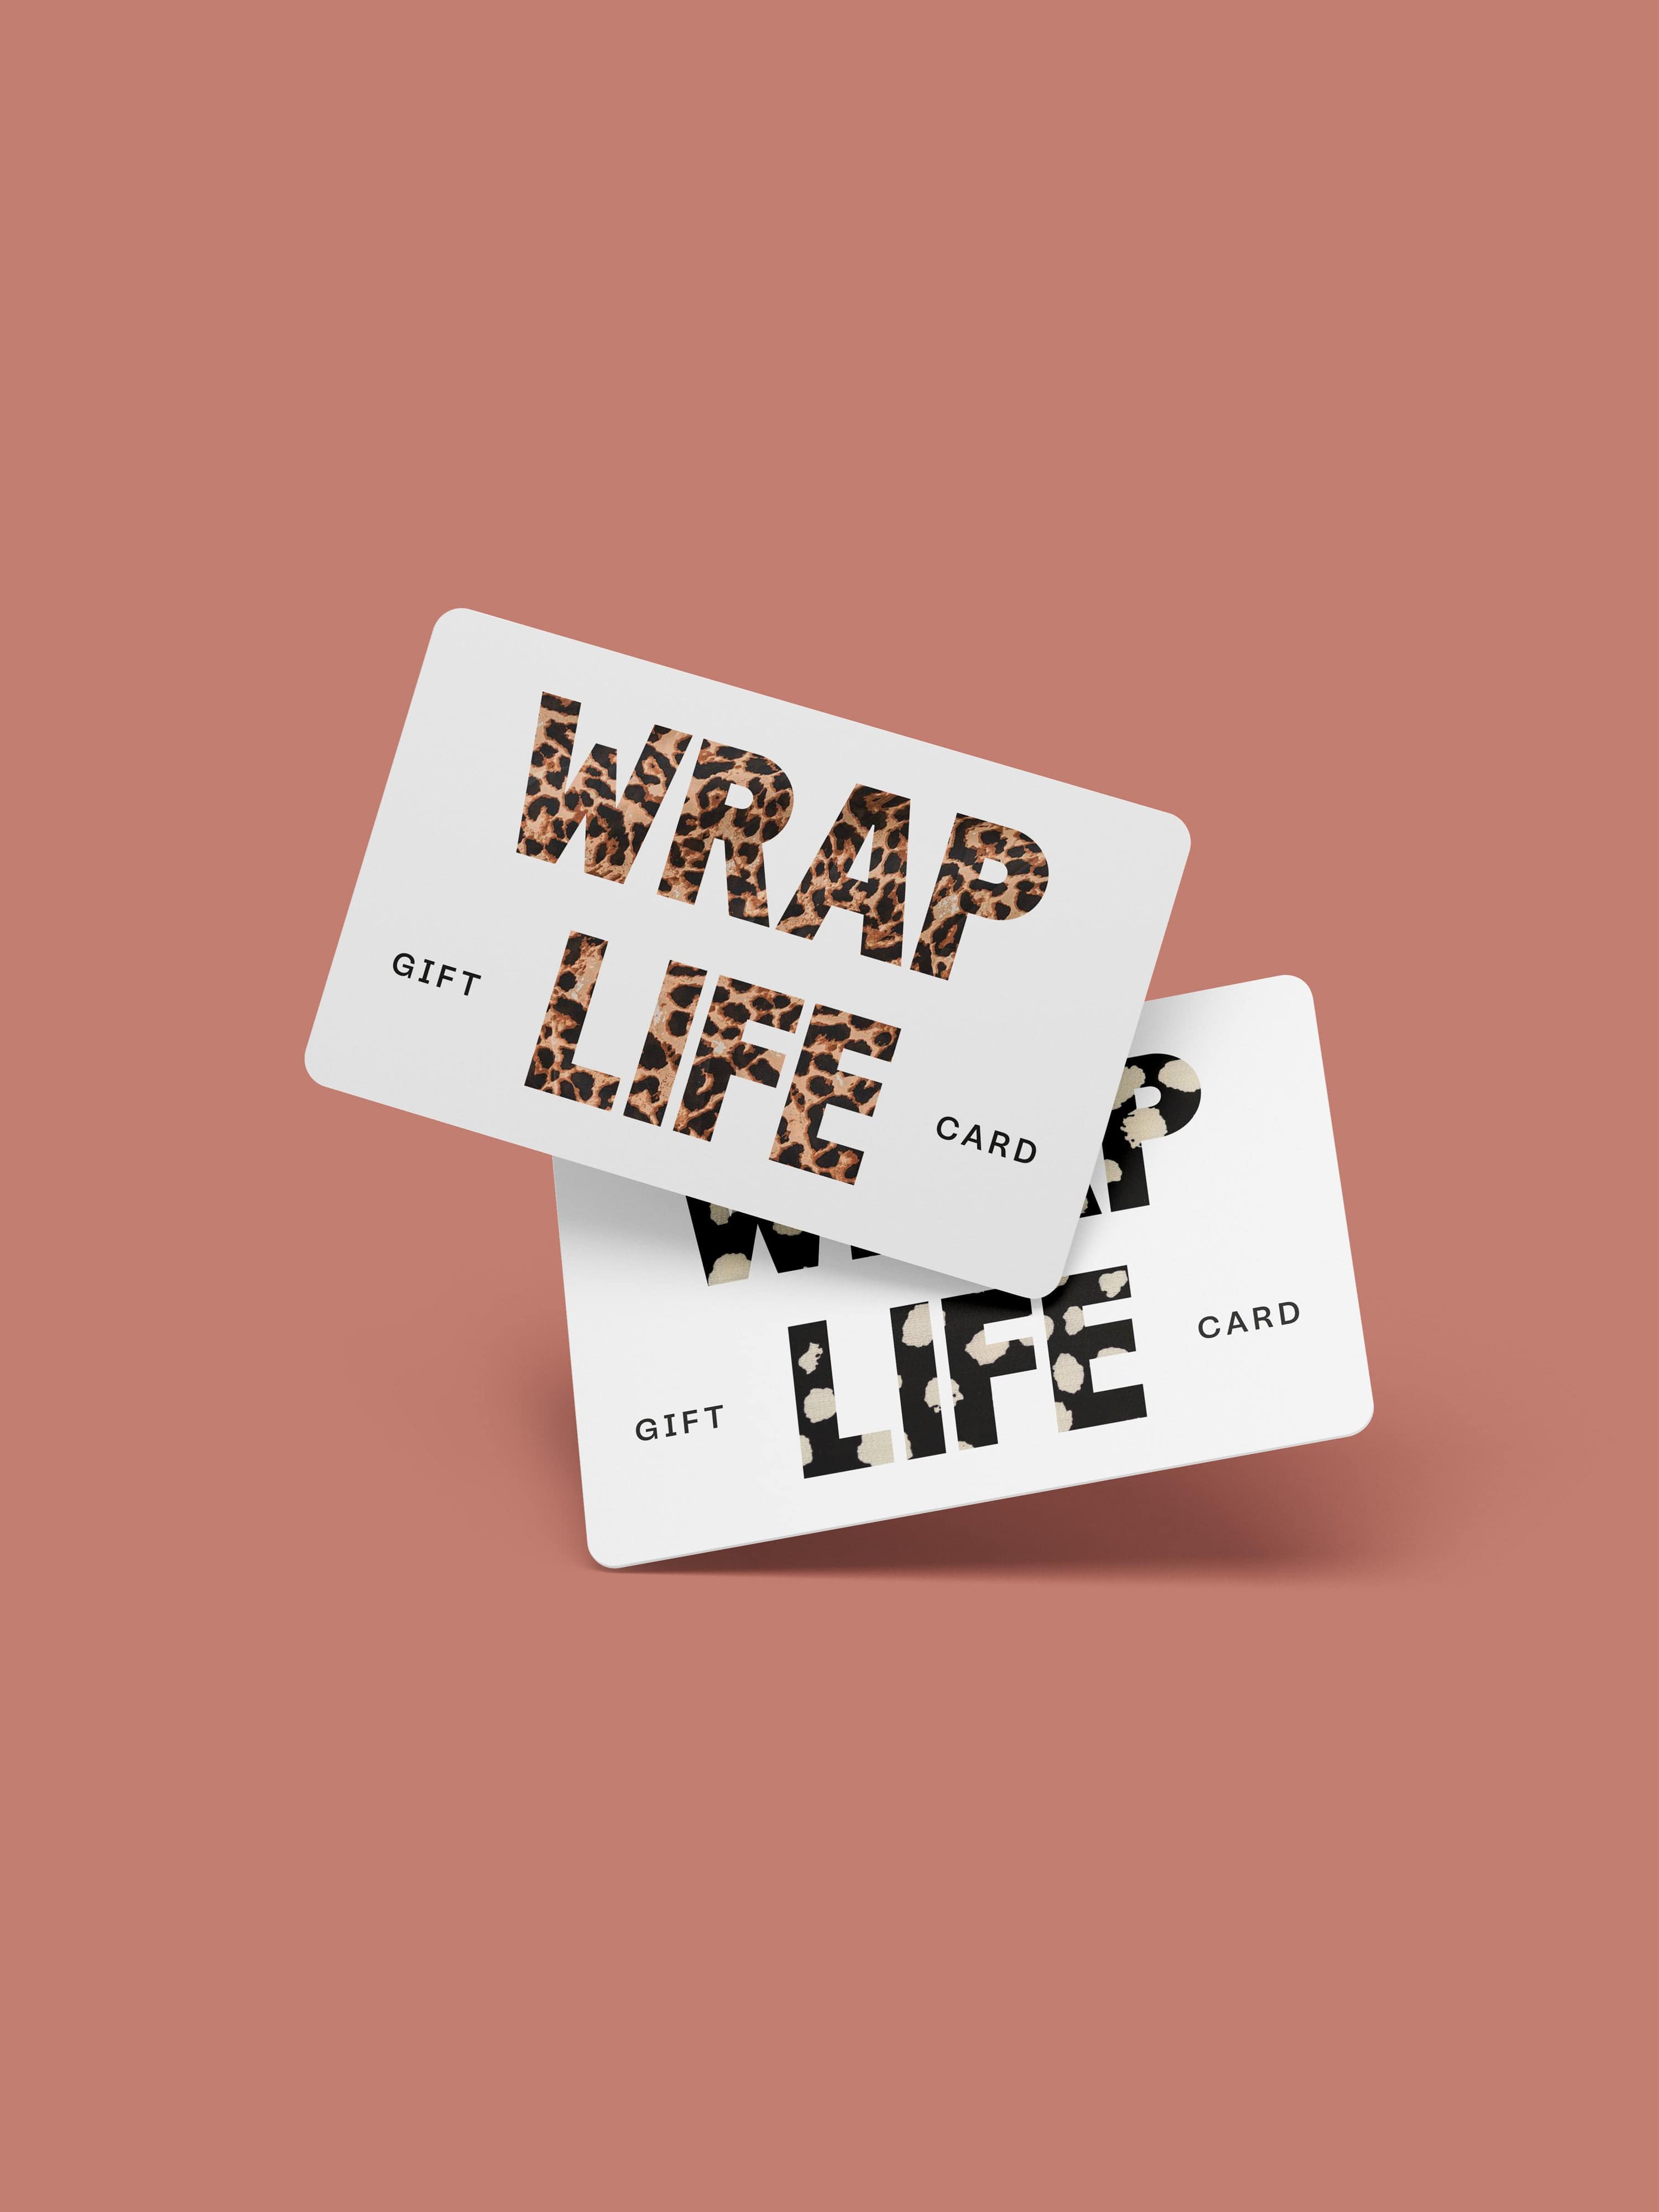 Wrap A Gift Card